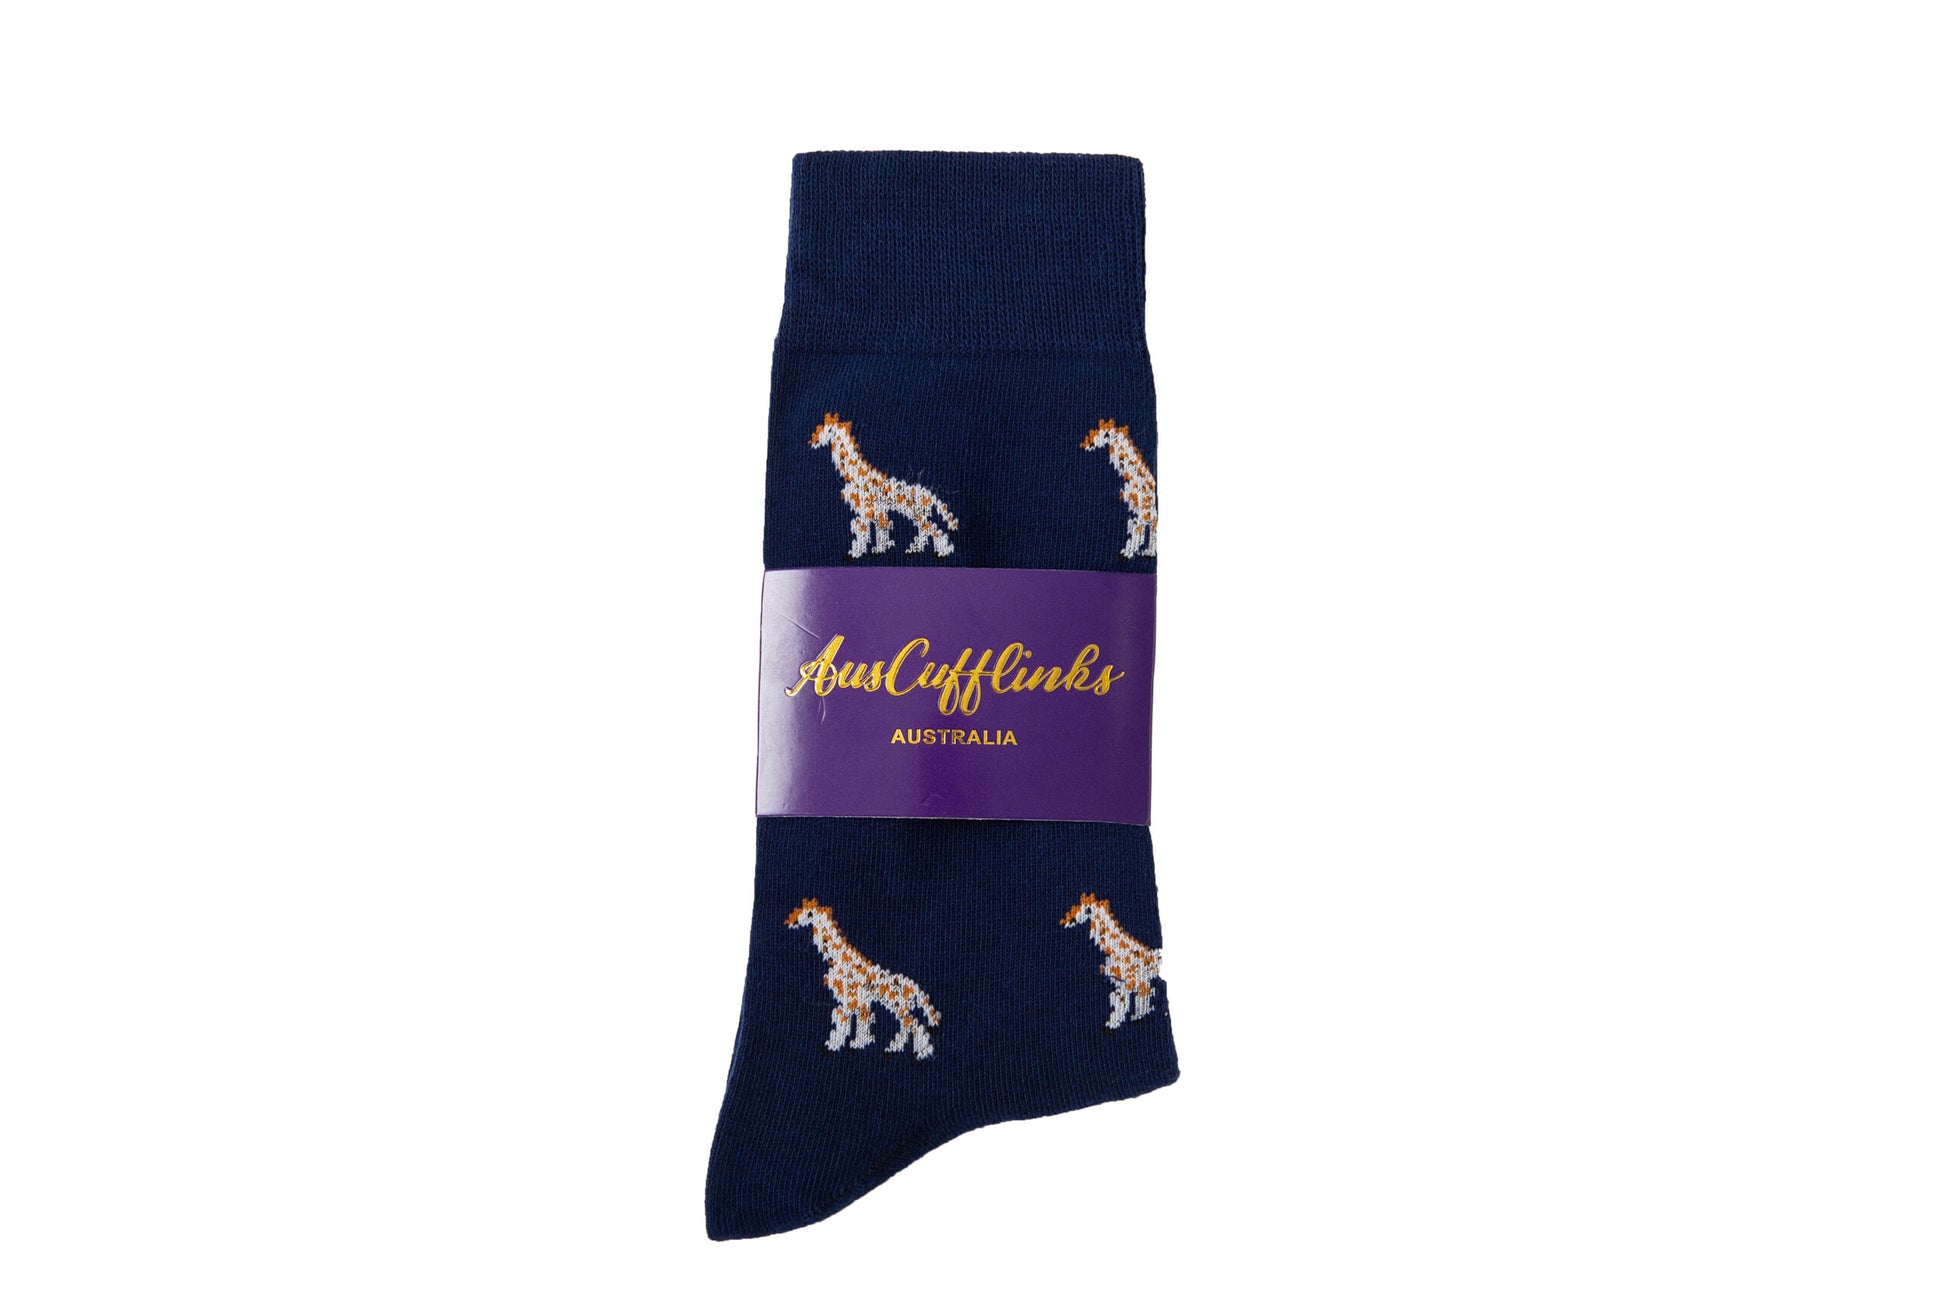 Giraffe Socks: A pair of Giraffe Socks.